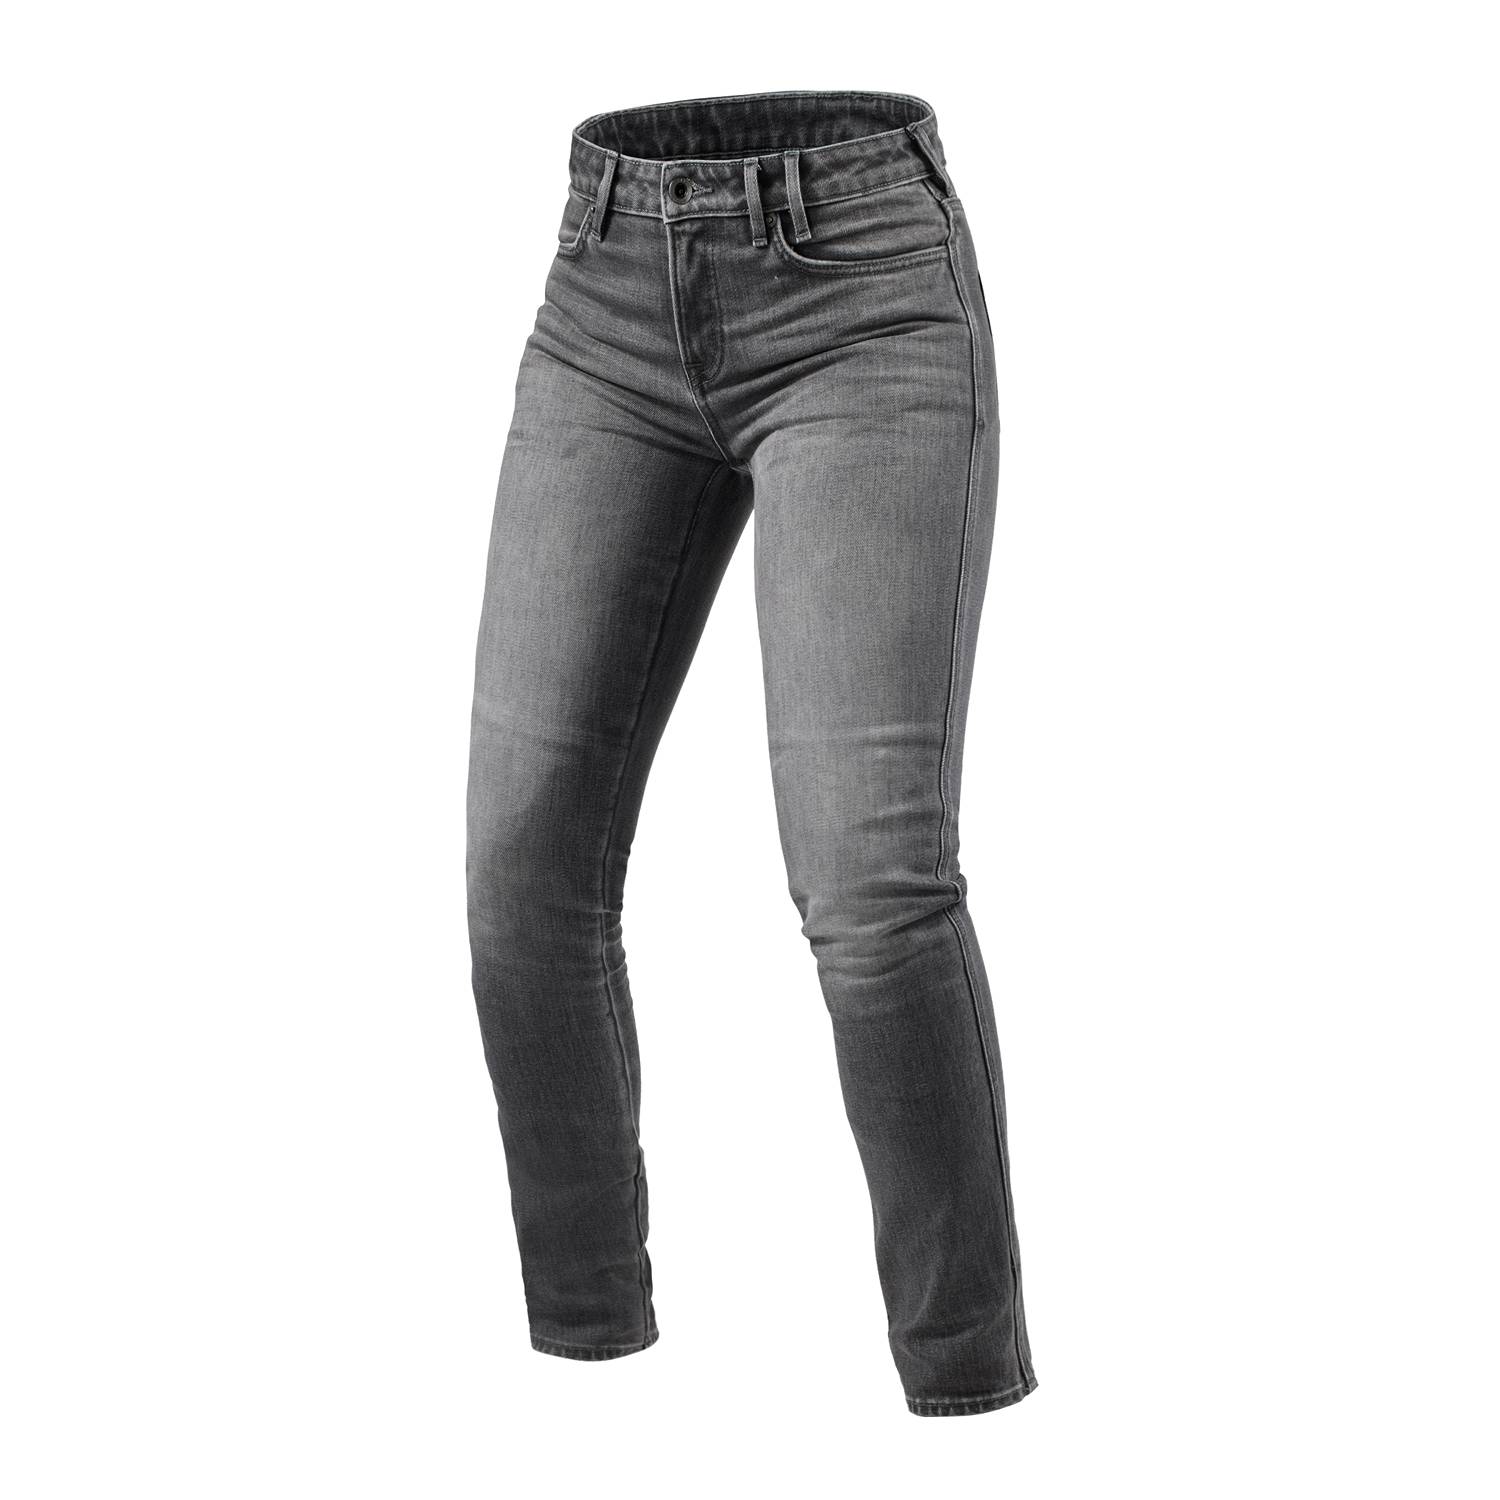 Image of REV'IT! Jeans Shelby 2 Ladies SK Medium Grey Stone L30 Size L30/W28 EN